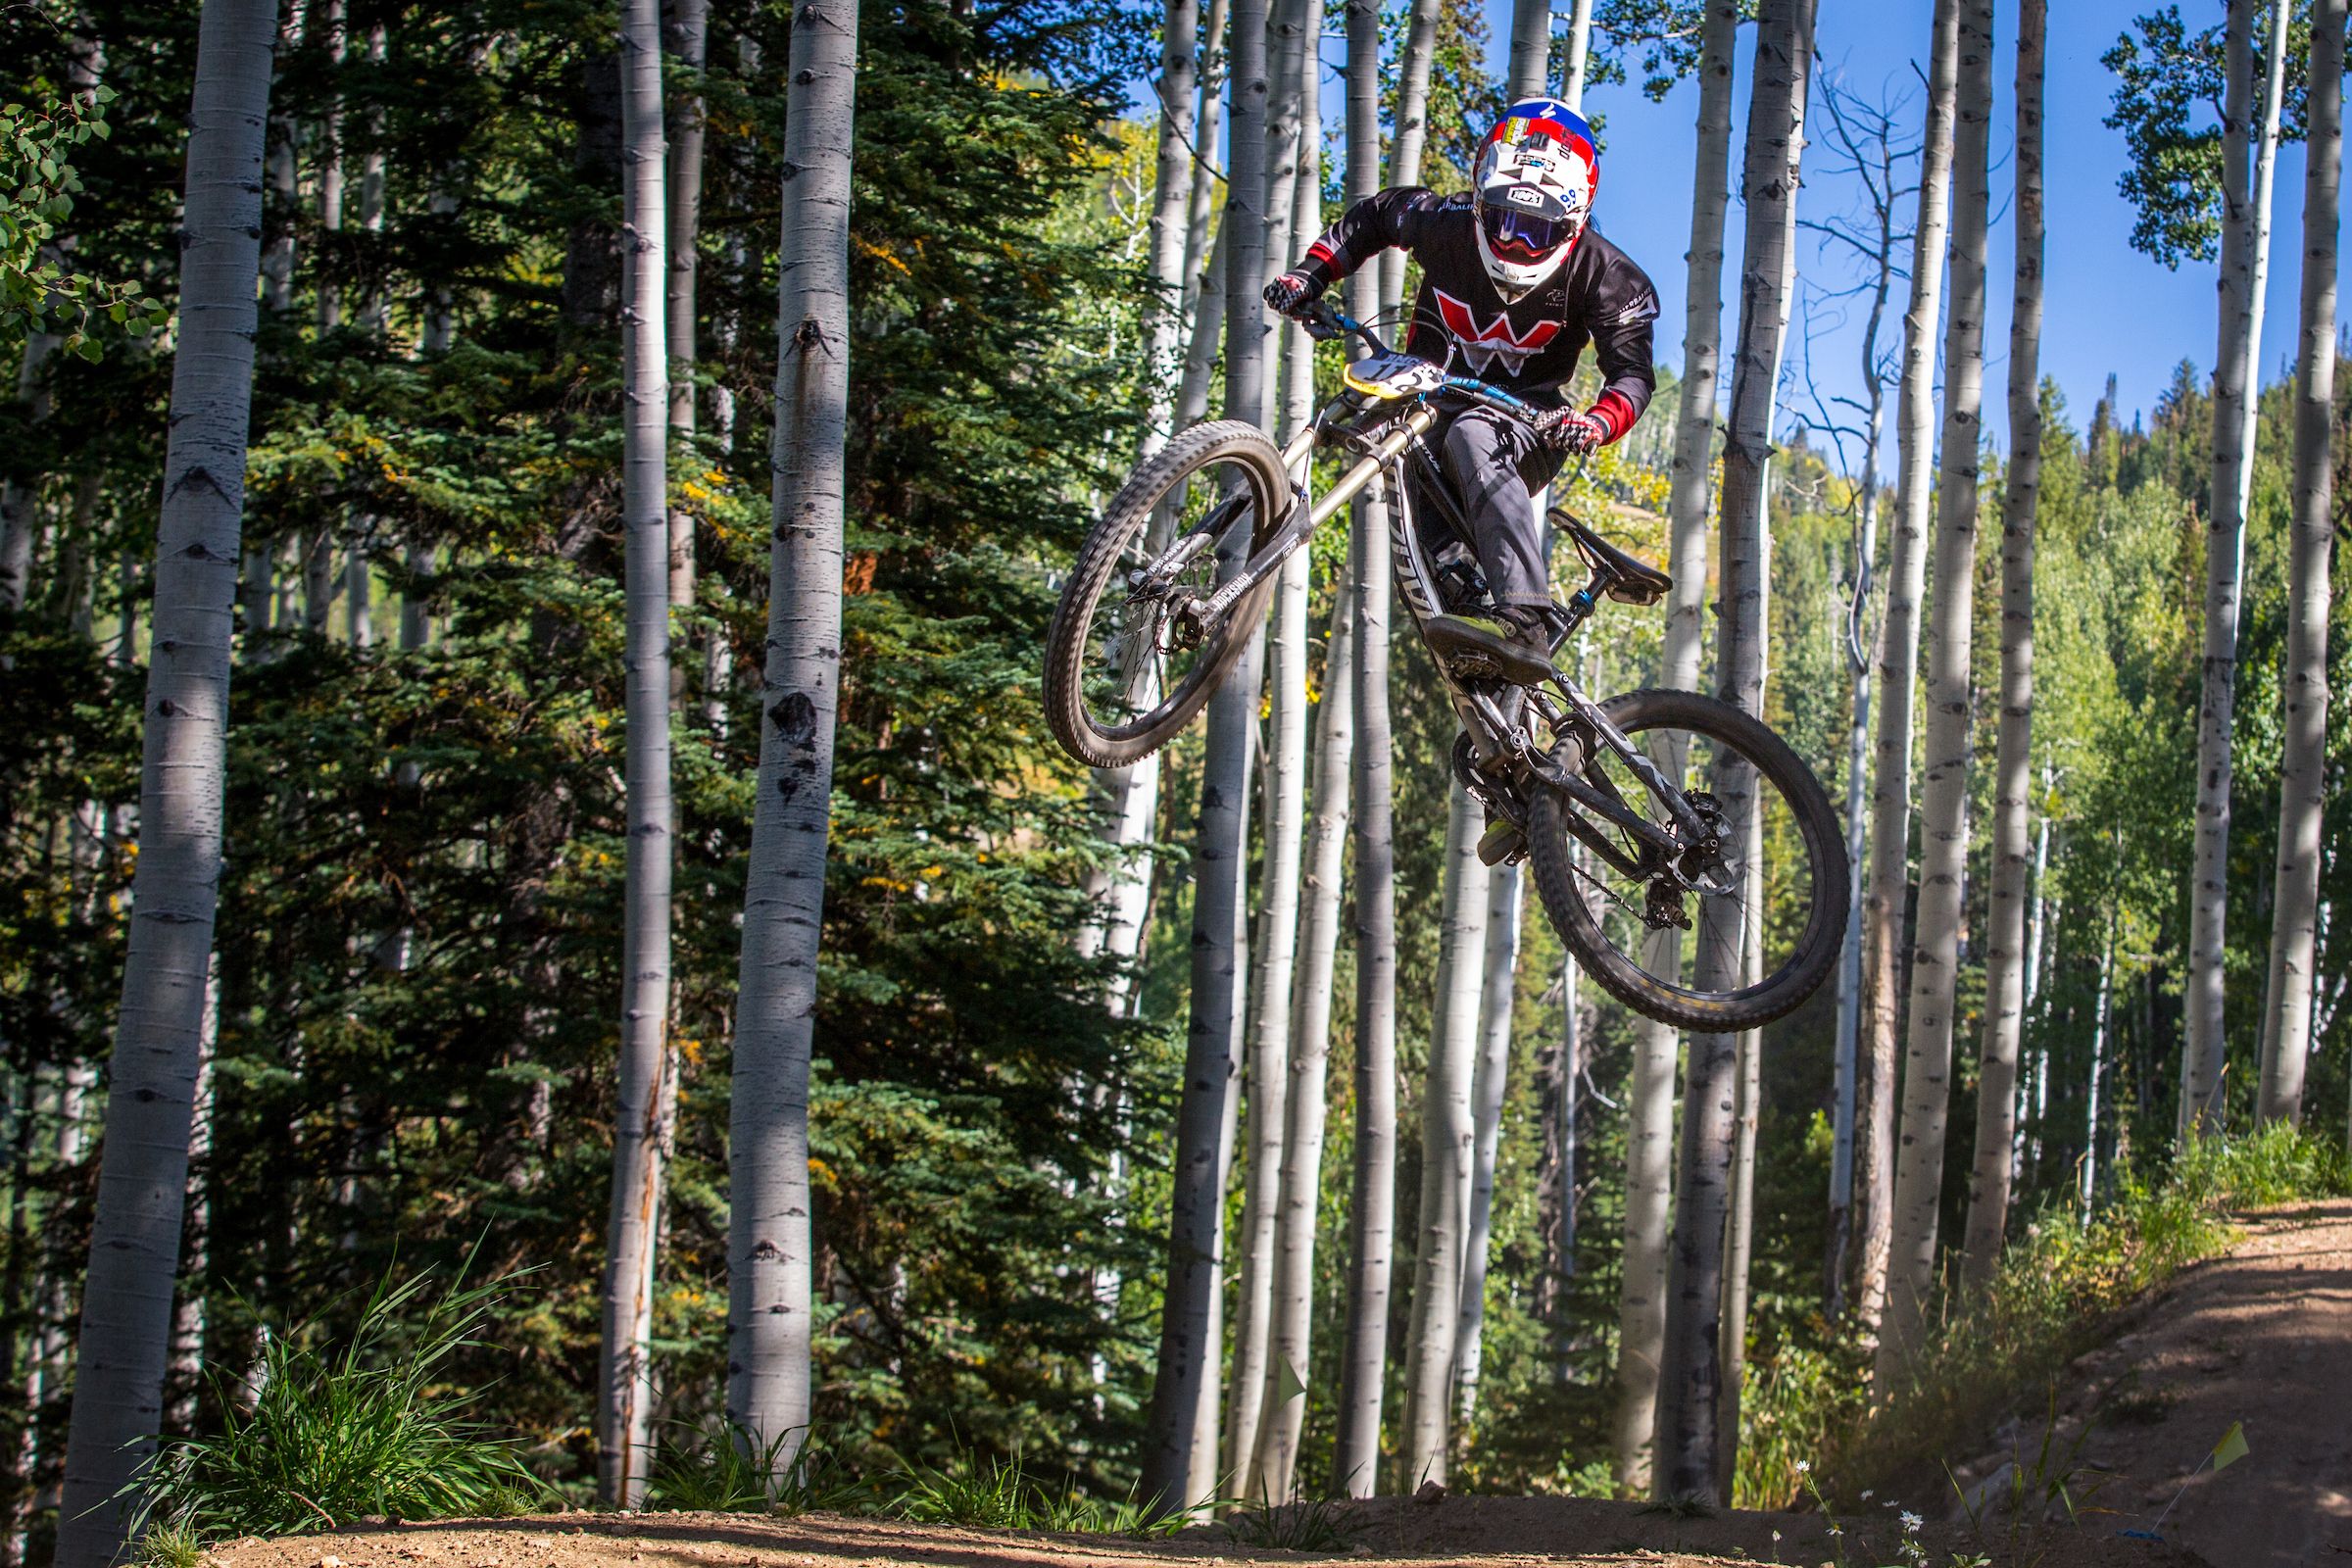 A mountain biker in a Western Colorado University jersey jumps on a mountain bike on a trail through aspen trees.